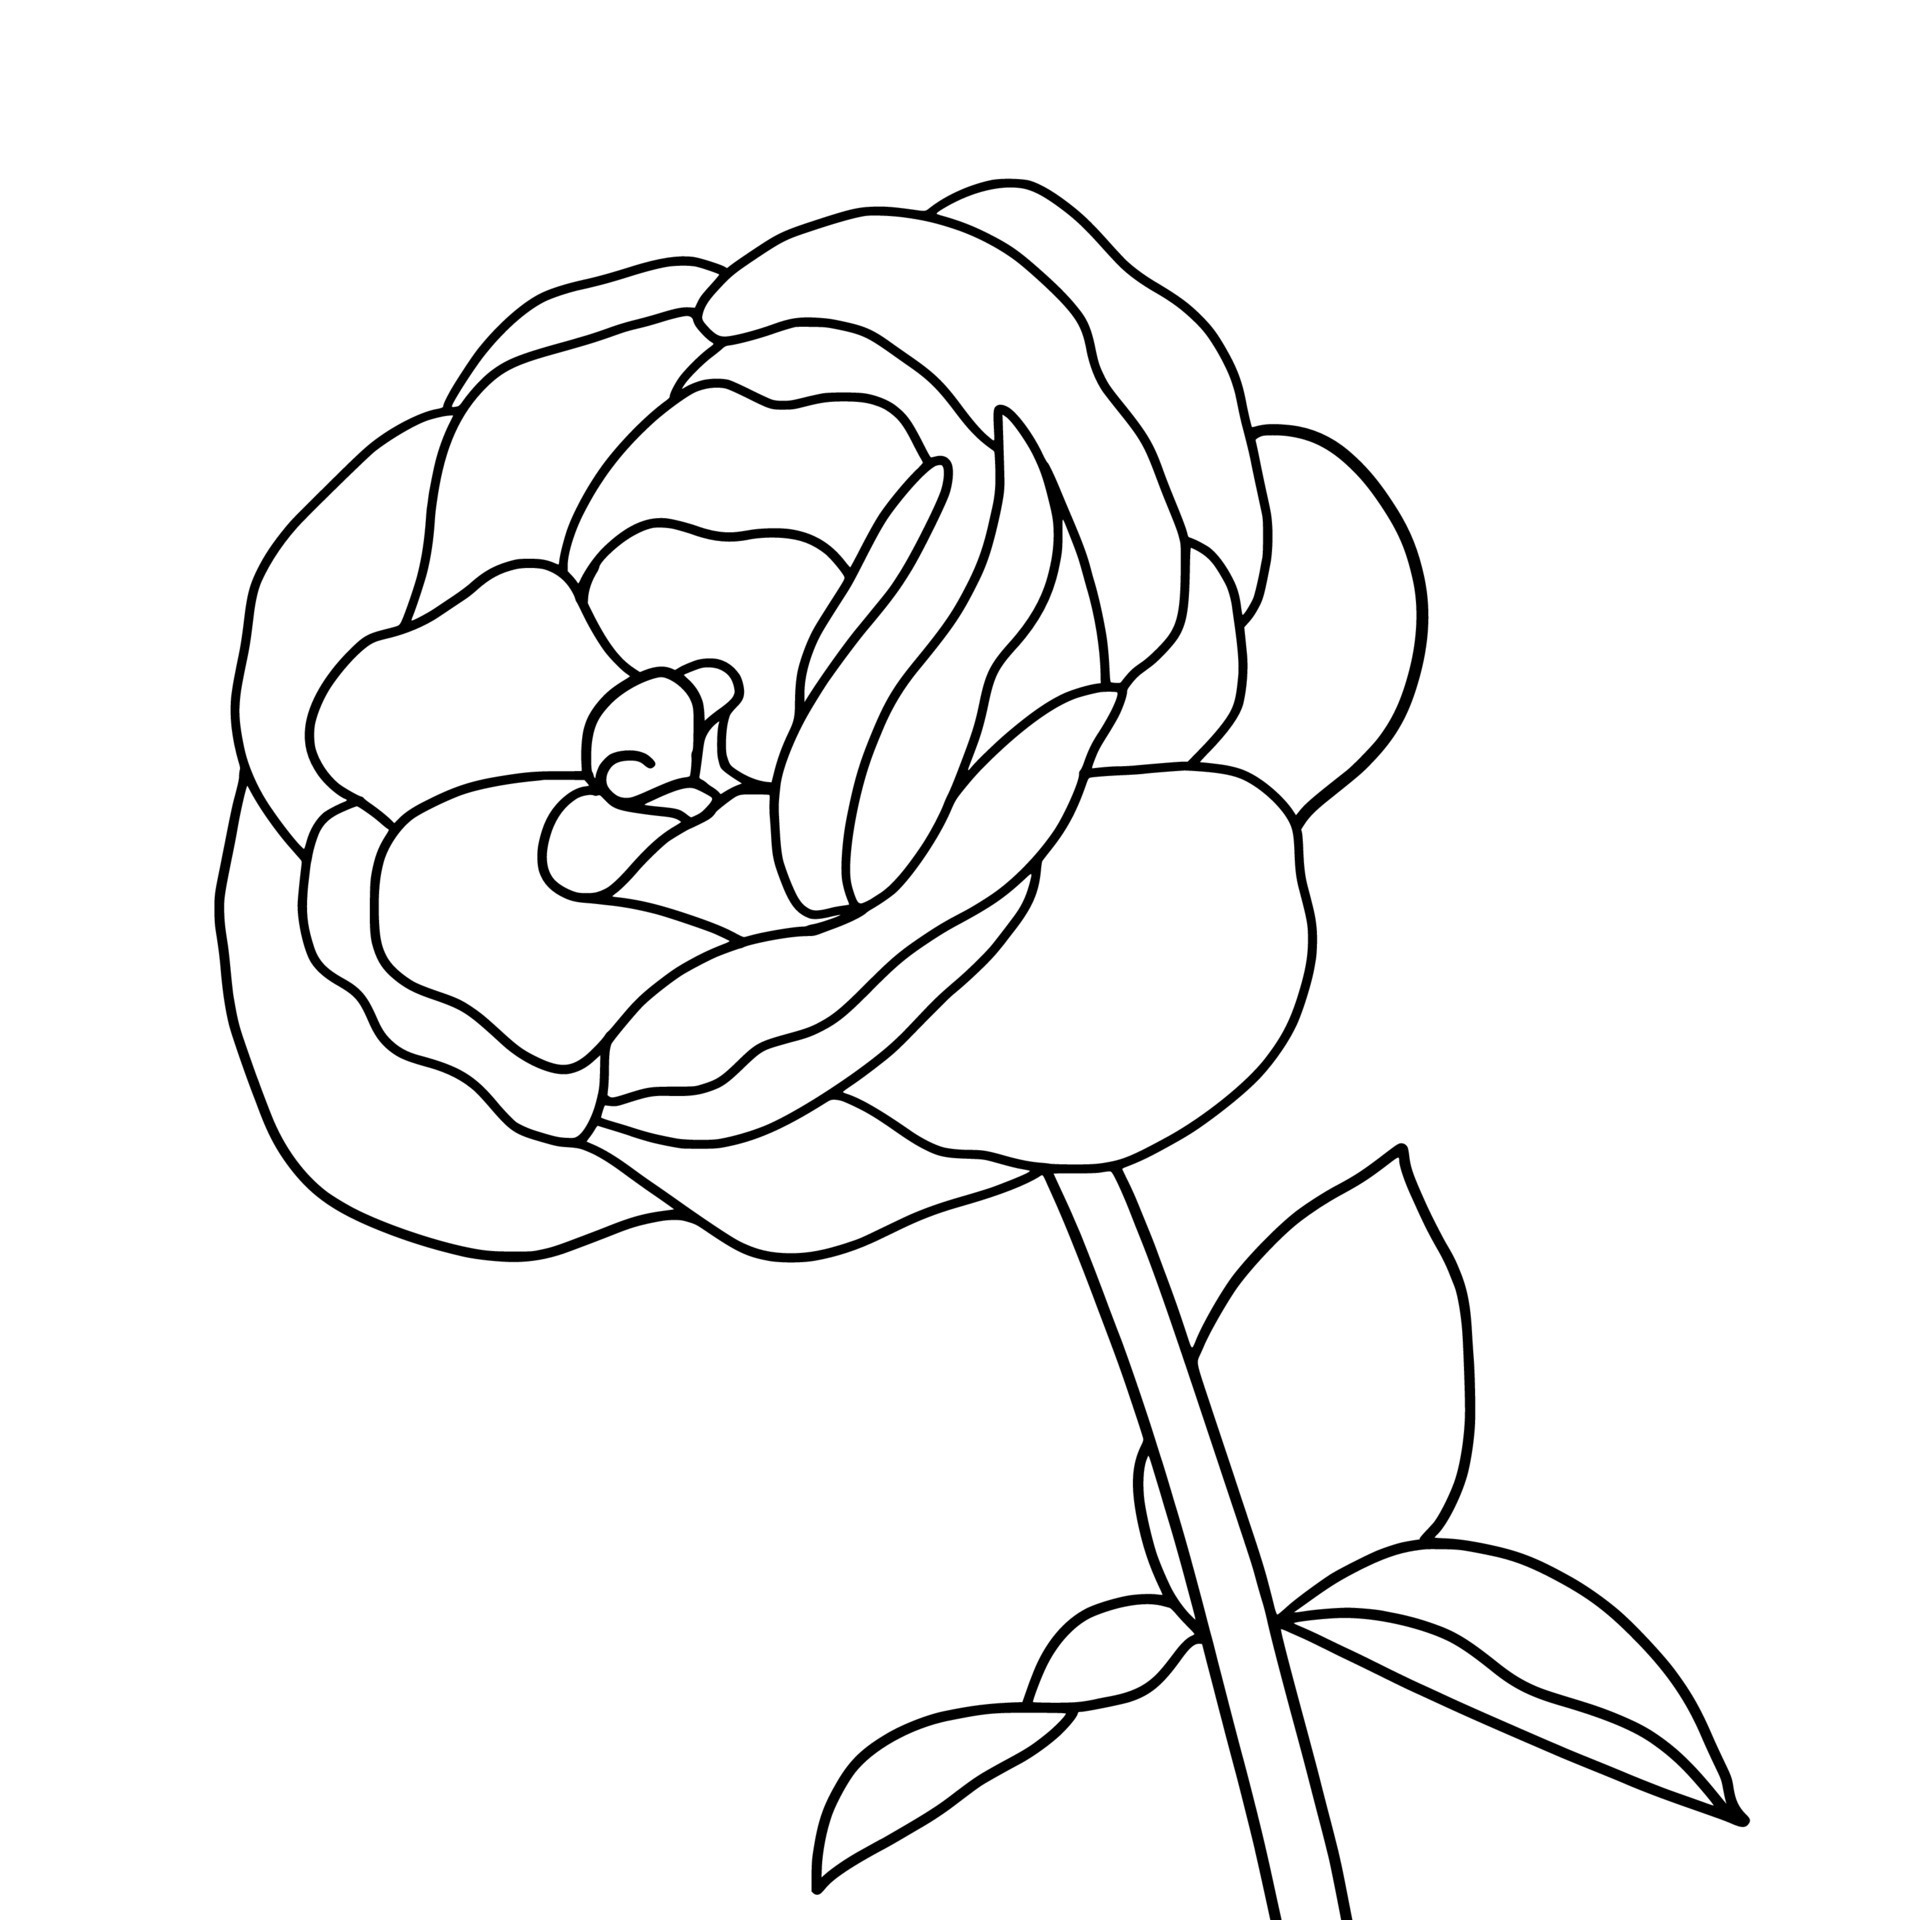 outline rose isolated on white background. vector illustartion 22662230 ...